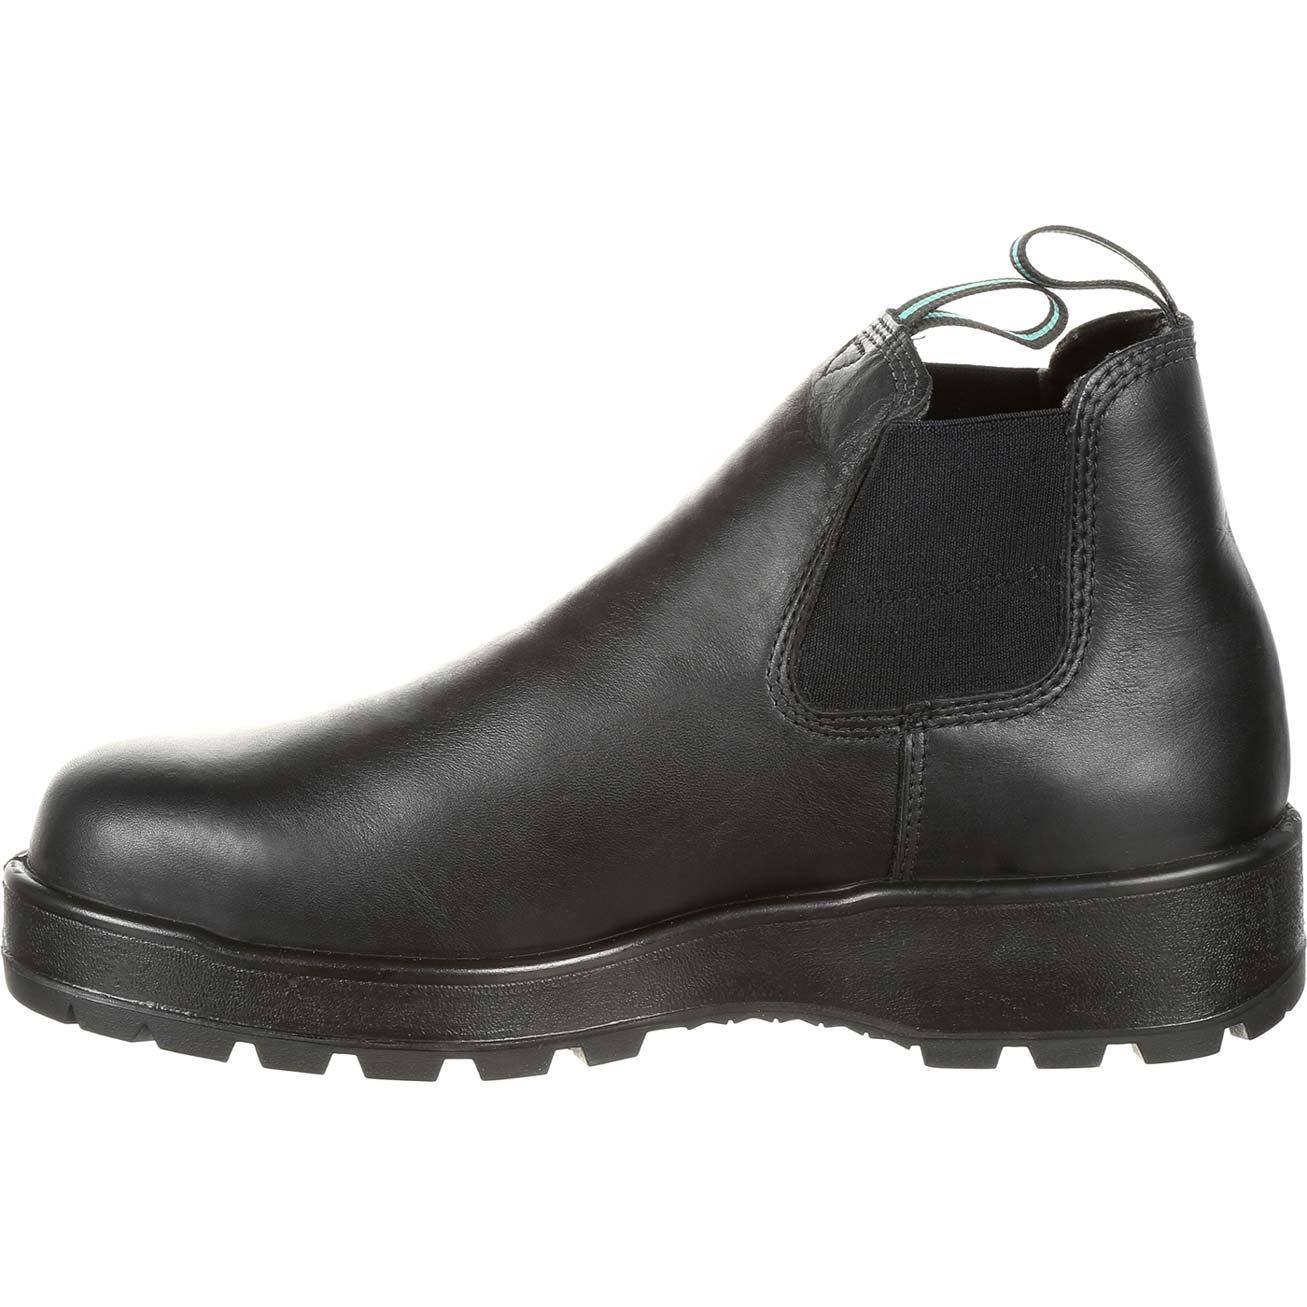 Lehigh Safety Shoes Steel Toe Romeo Work Shoe, LEHI013